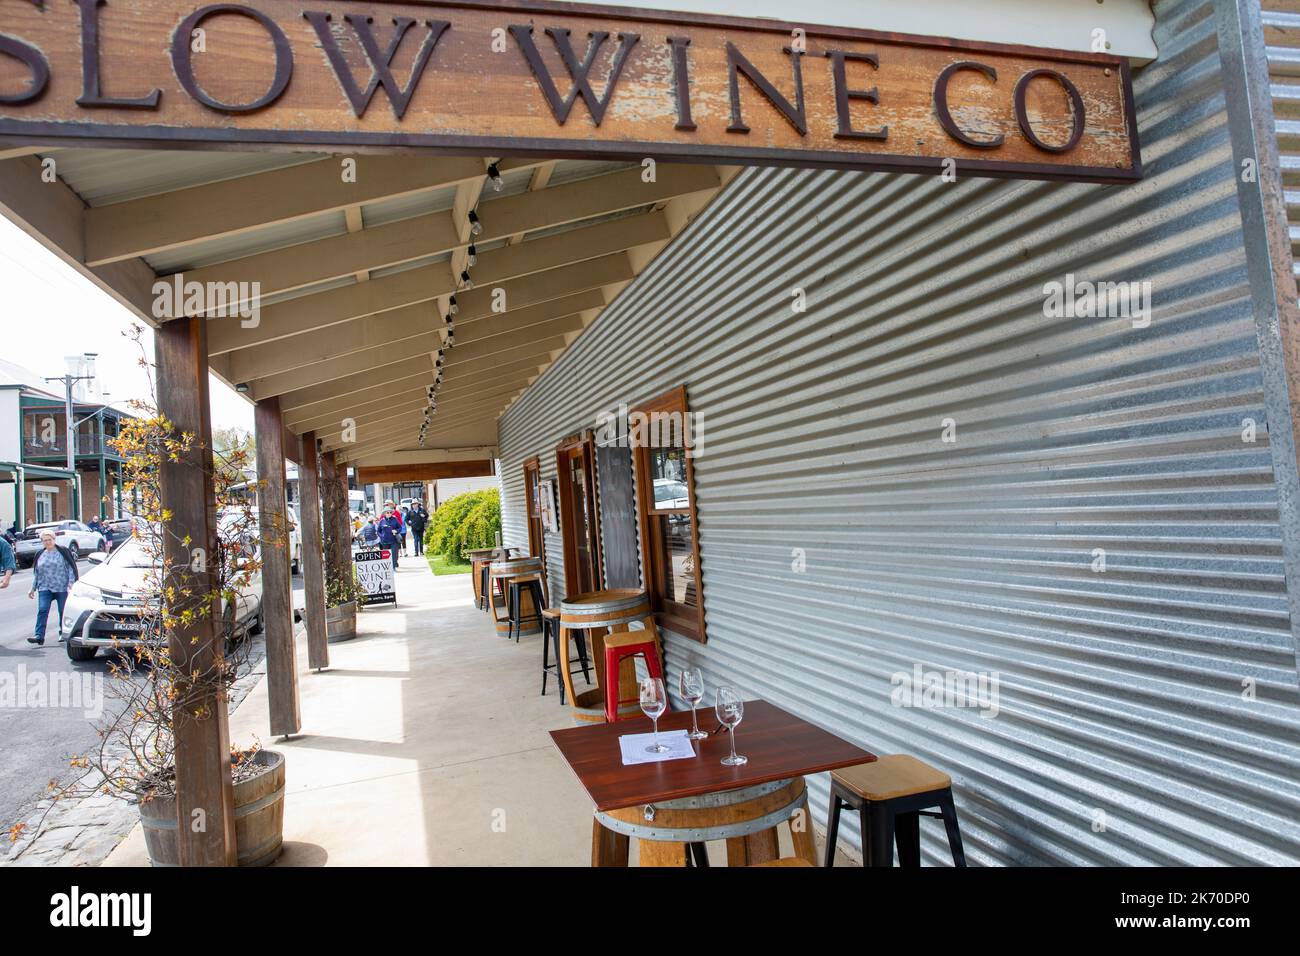 Millthorpe village Australia and slow wine co vineyard and wine tasting venue,NSW,Australia Stock Photo